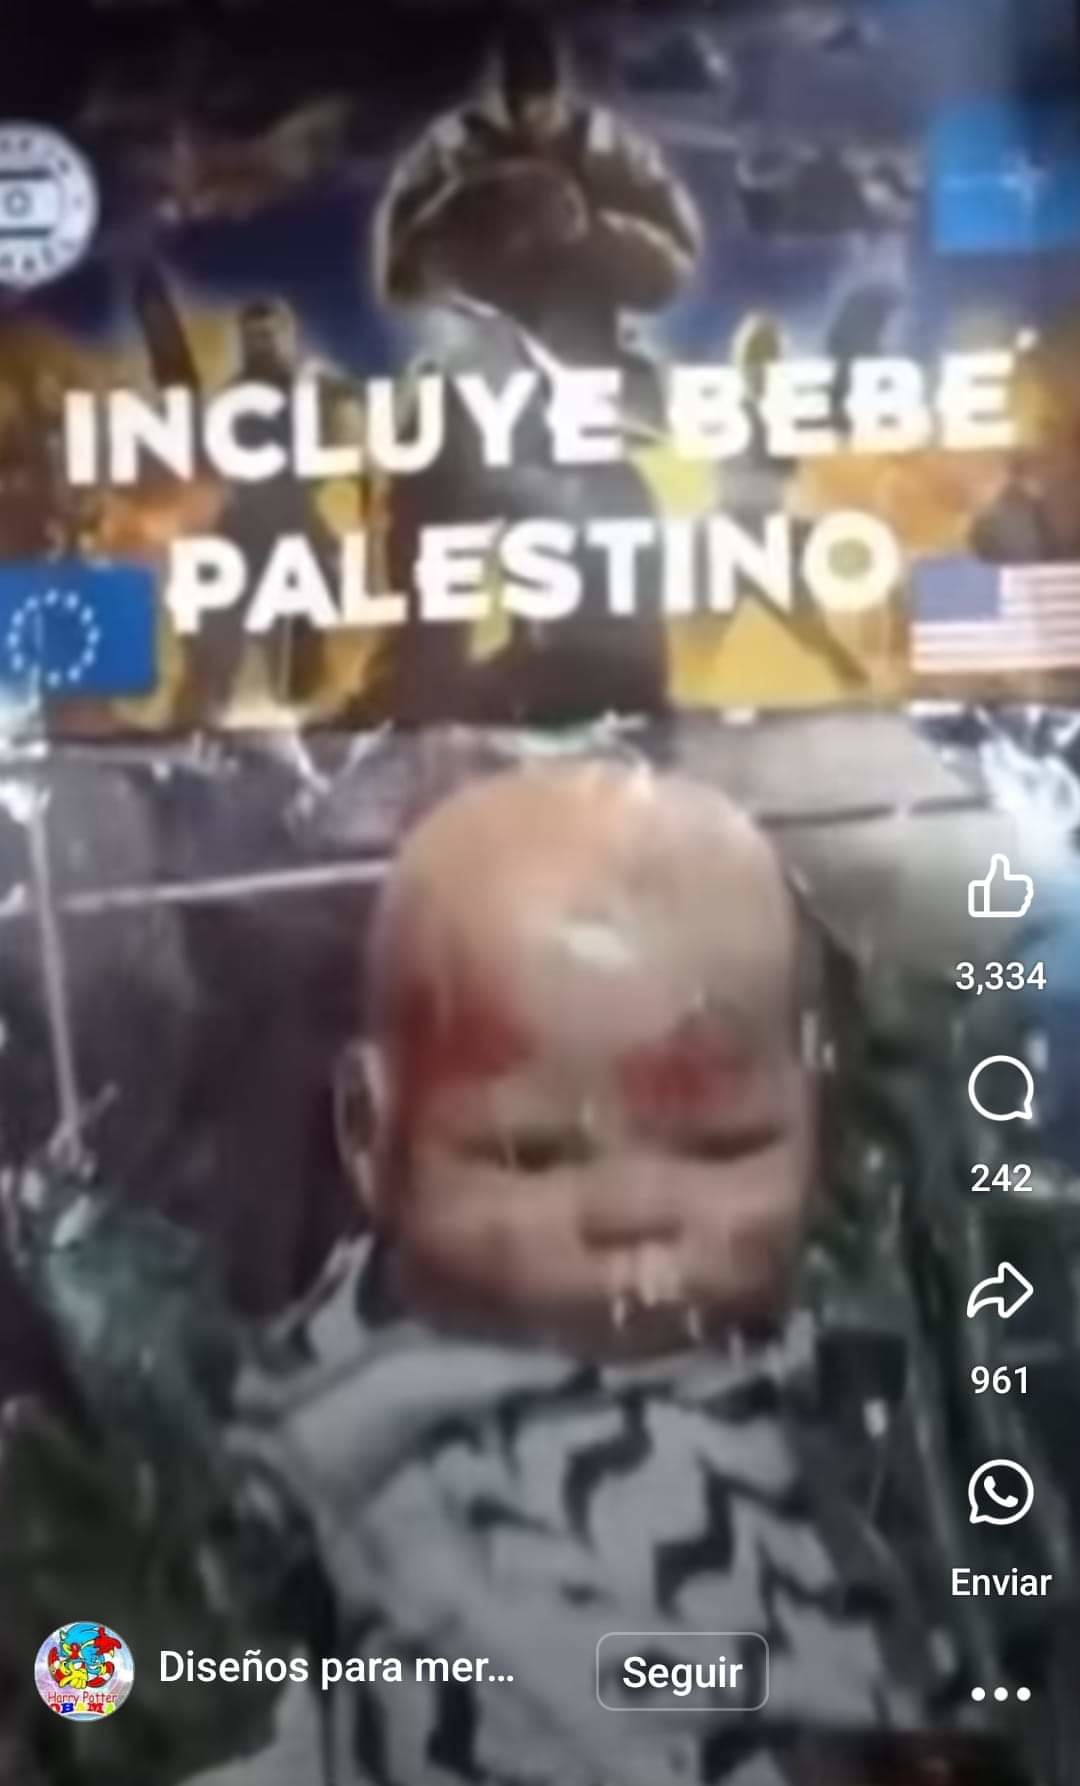 Incluye bebé palestino - meme